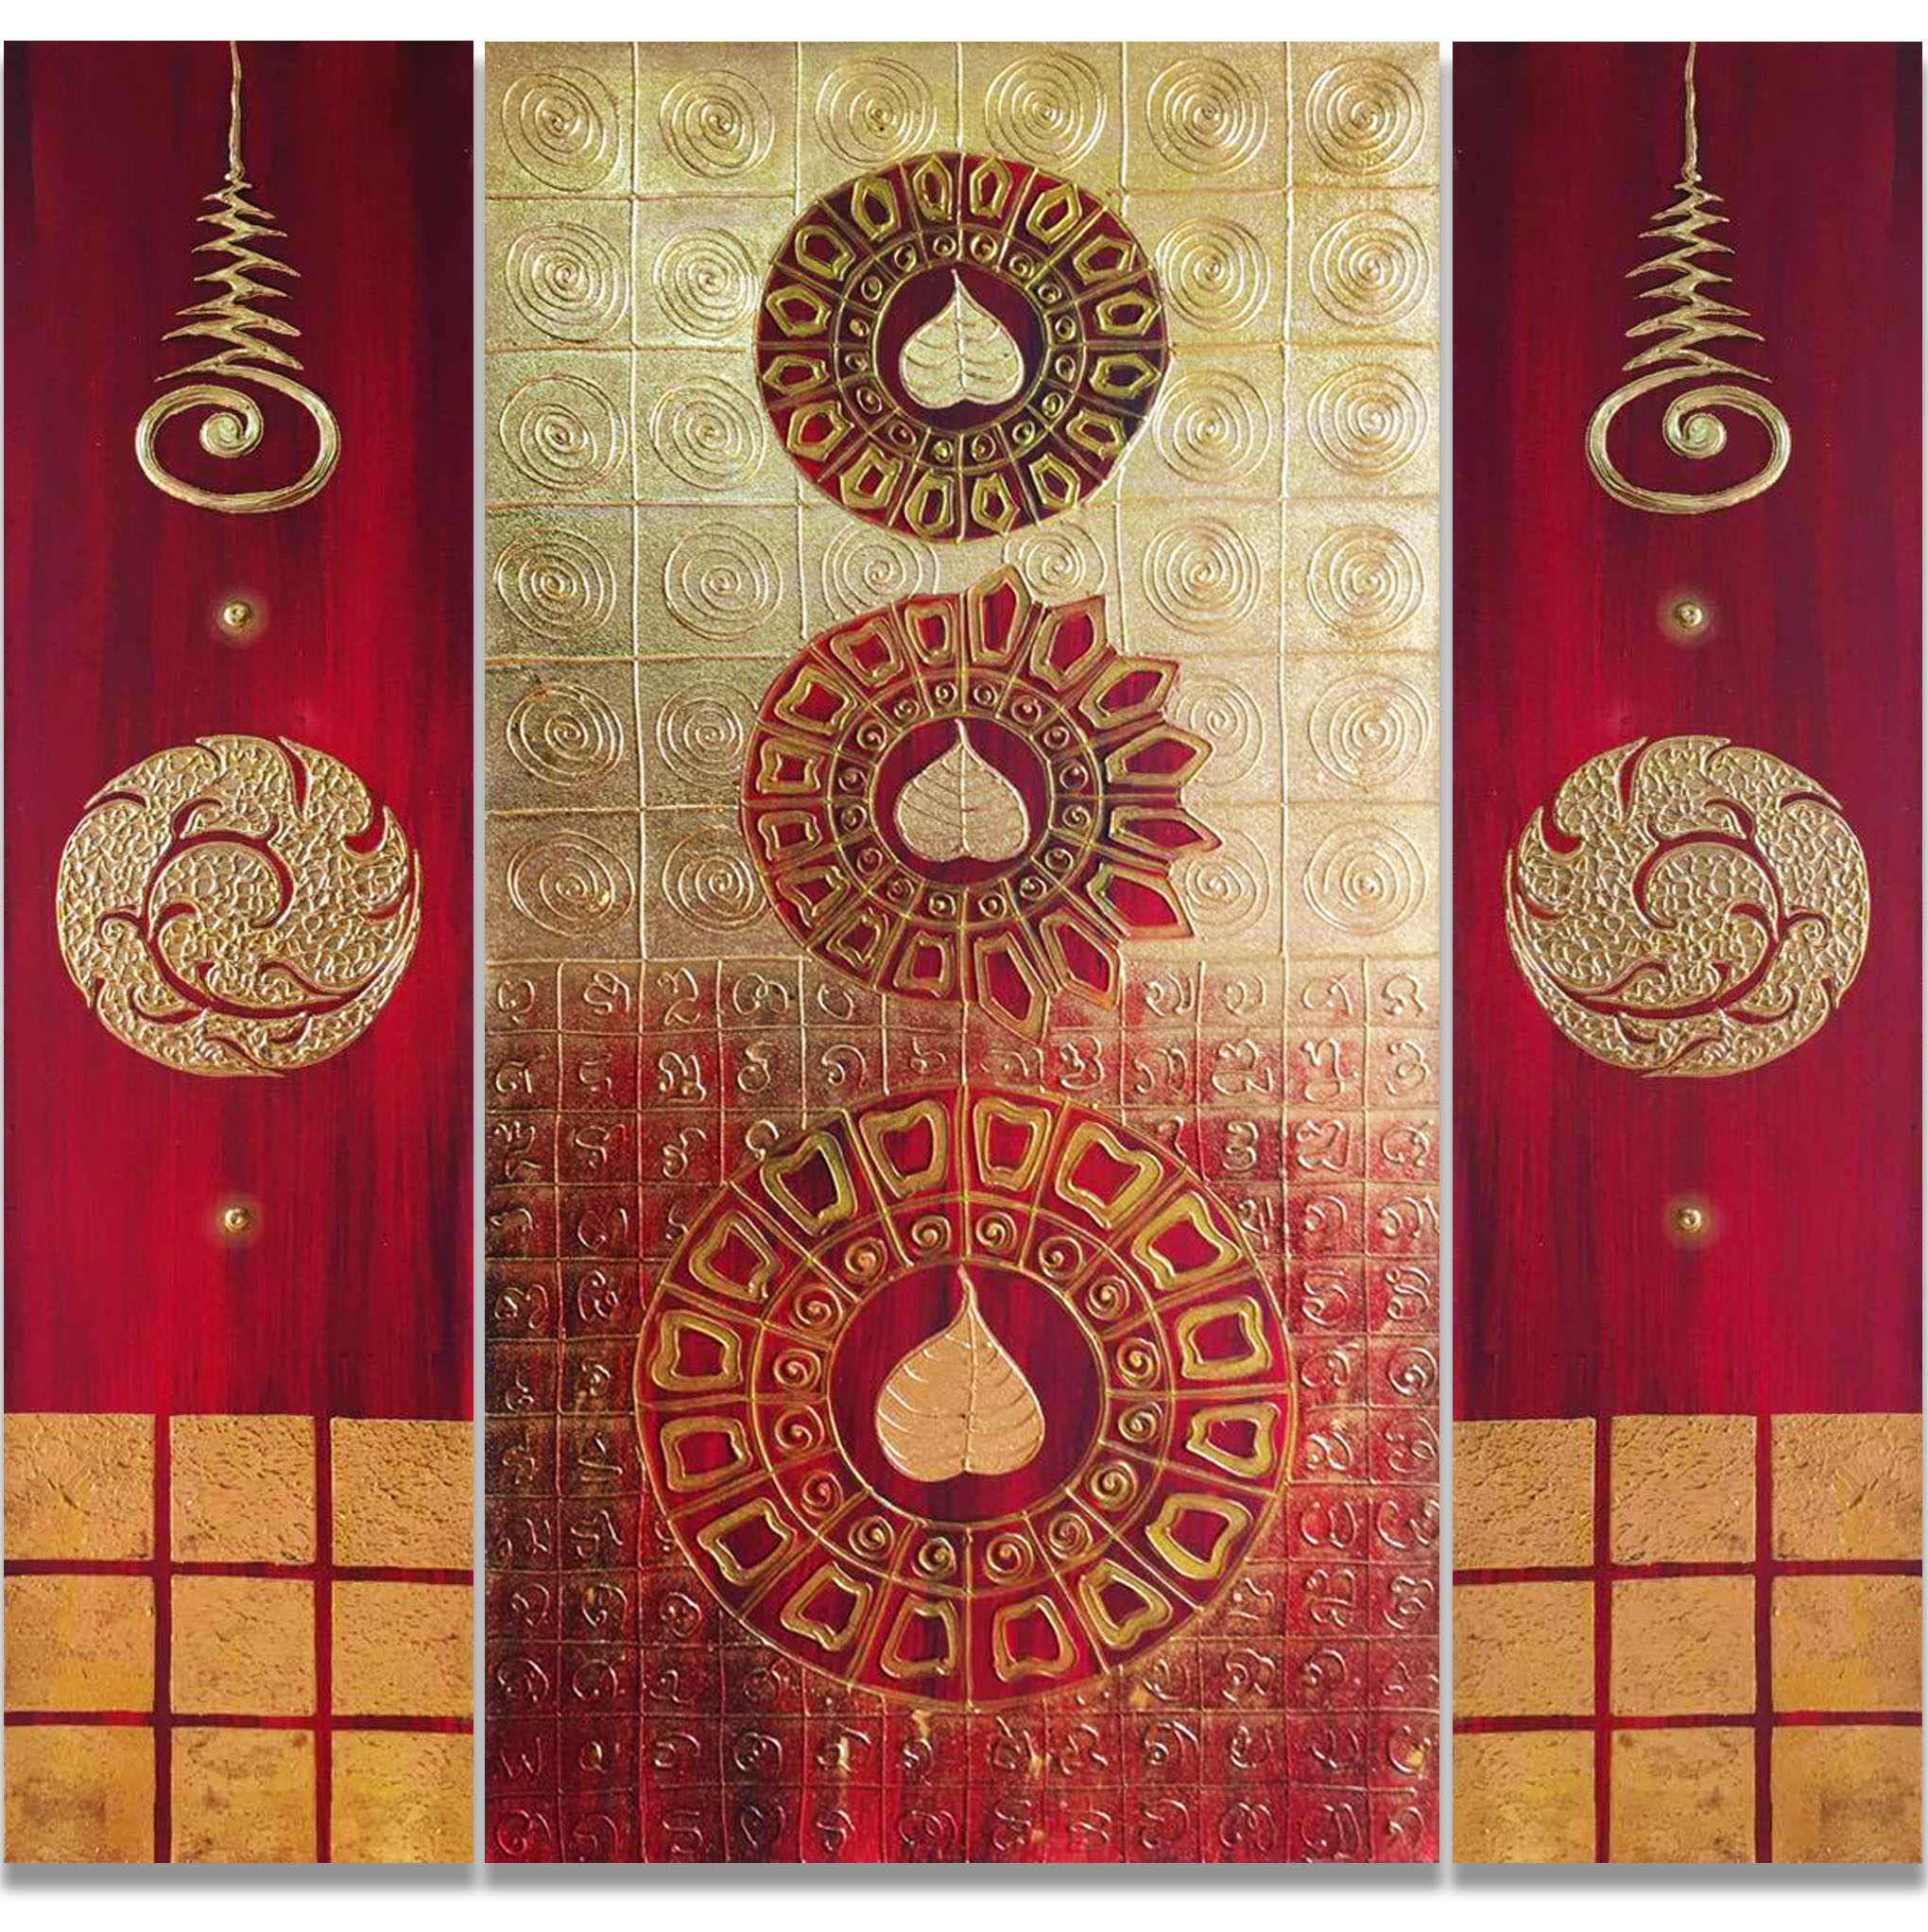 Bangkok Painting Contemporary Acrylic Painting Golden Bodhi Leaf